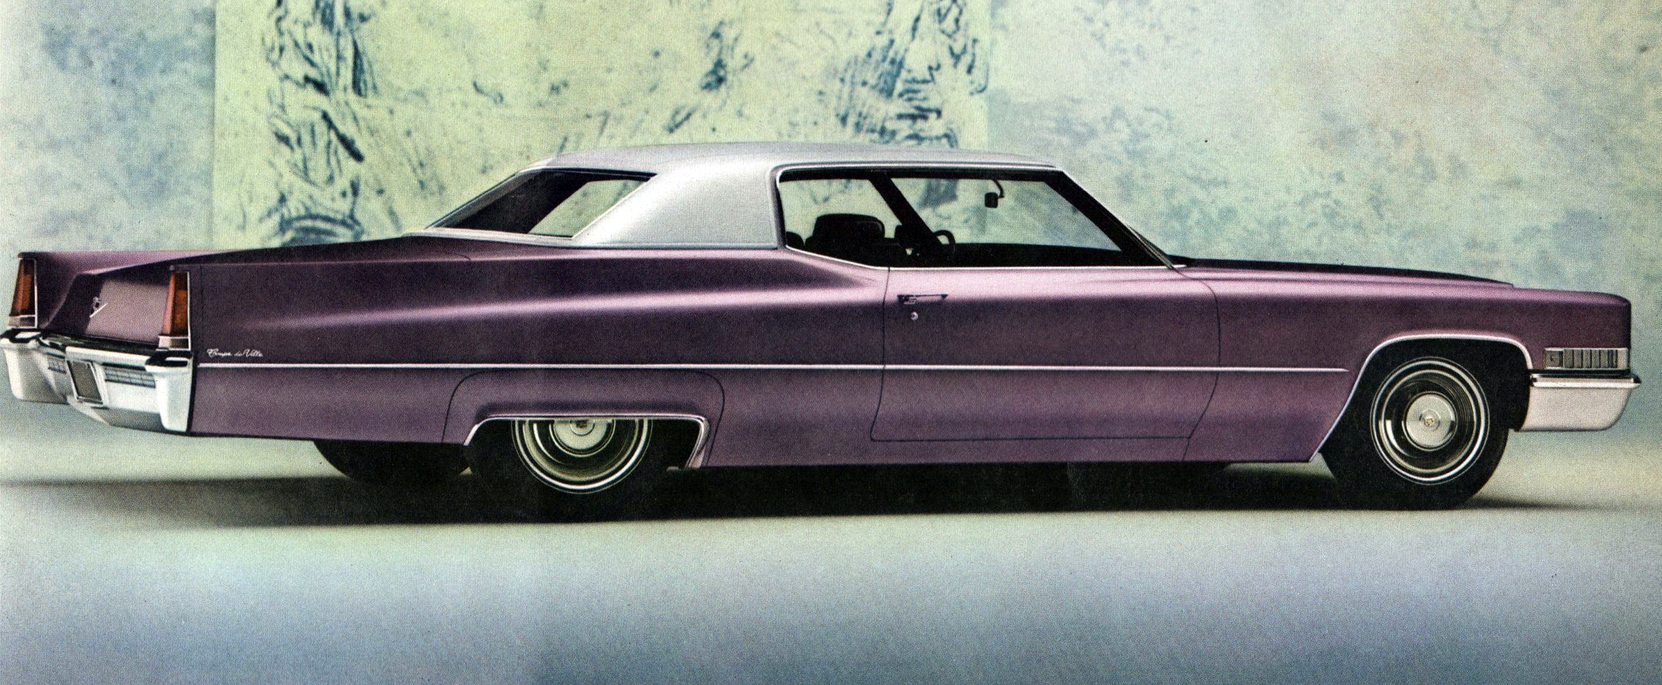 1969 Cadillac DeVille Coupe 